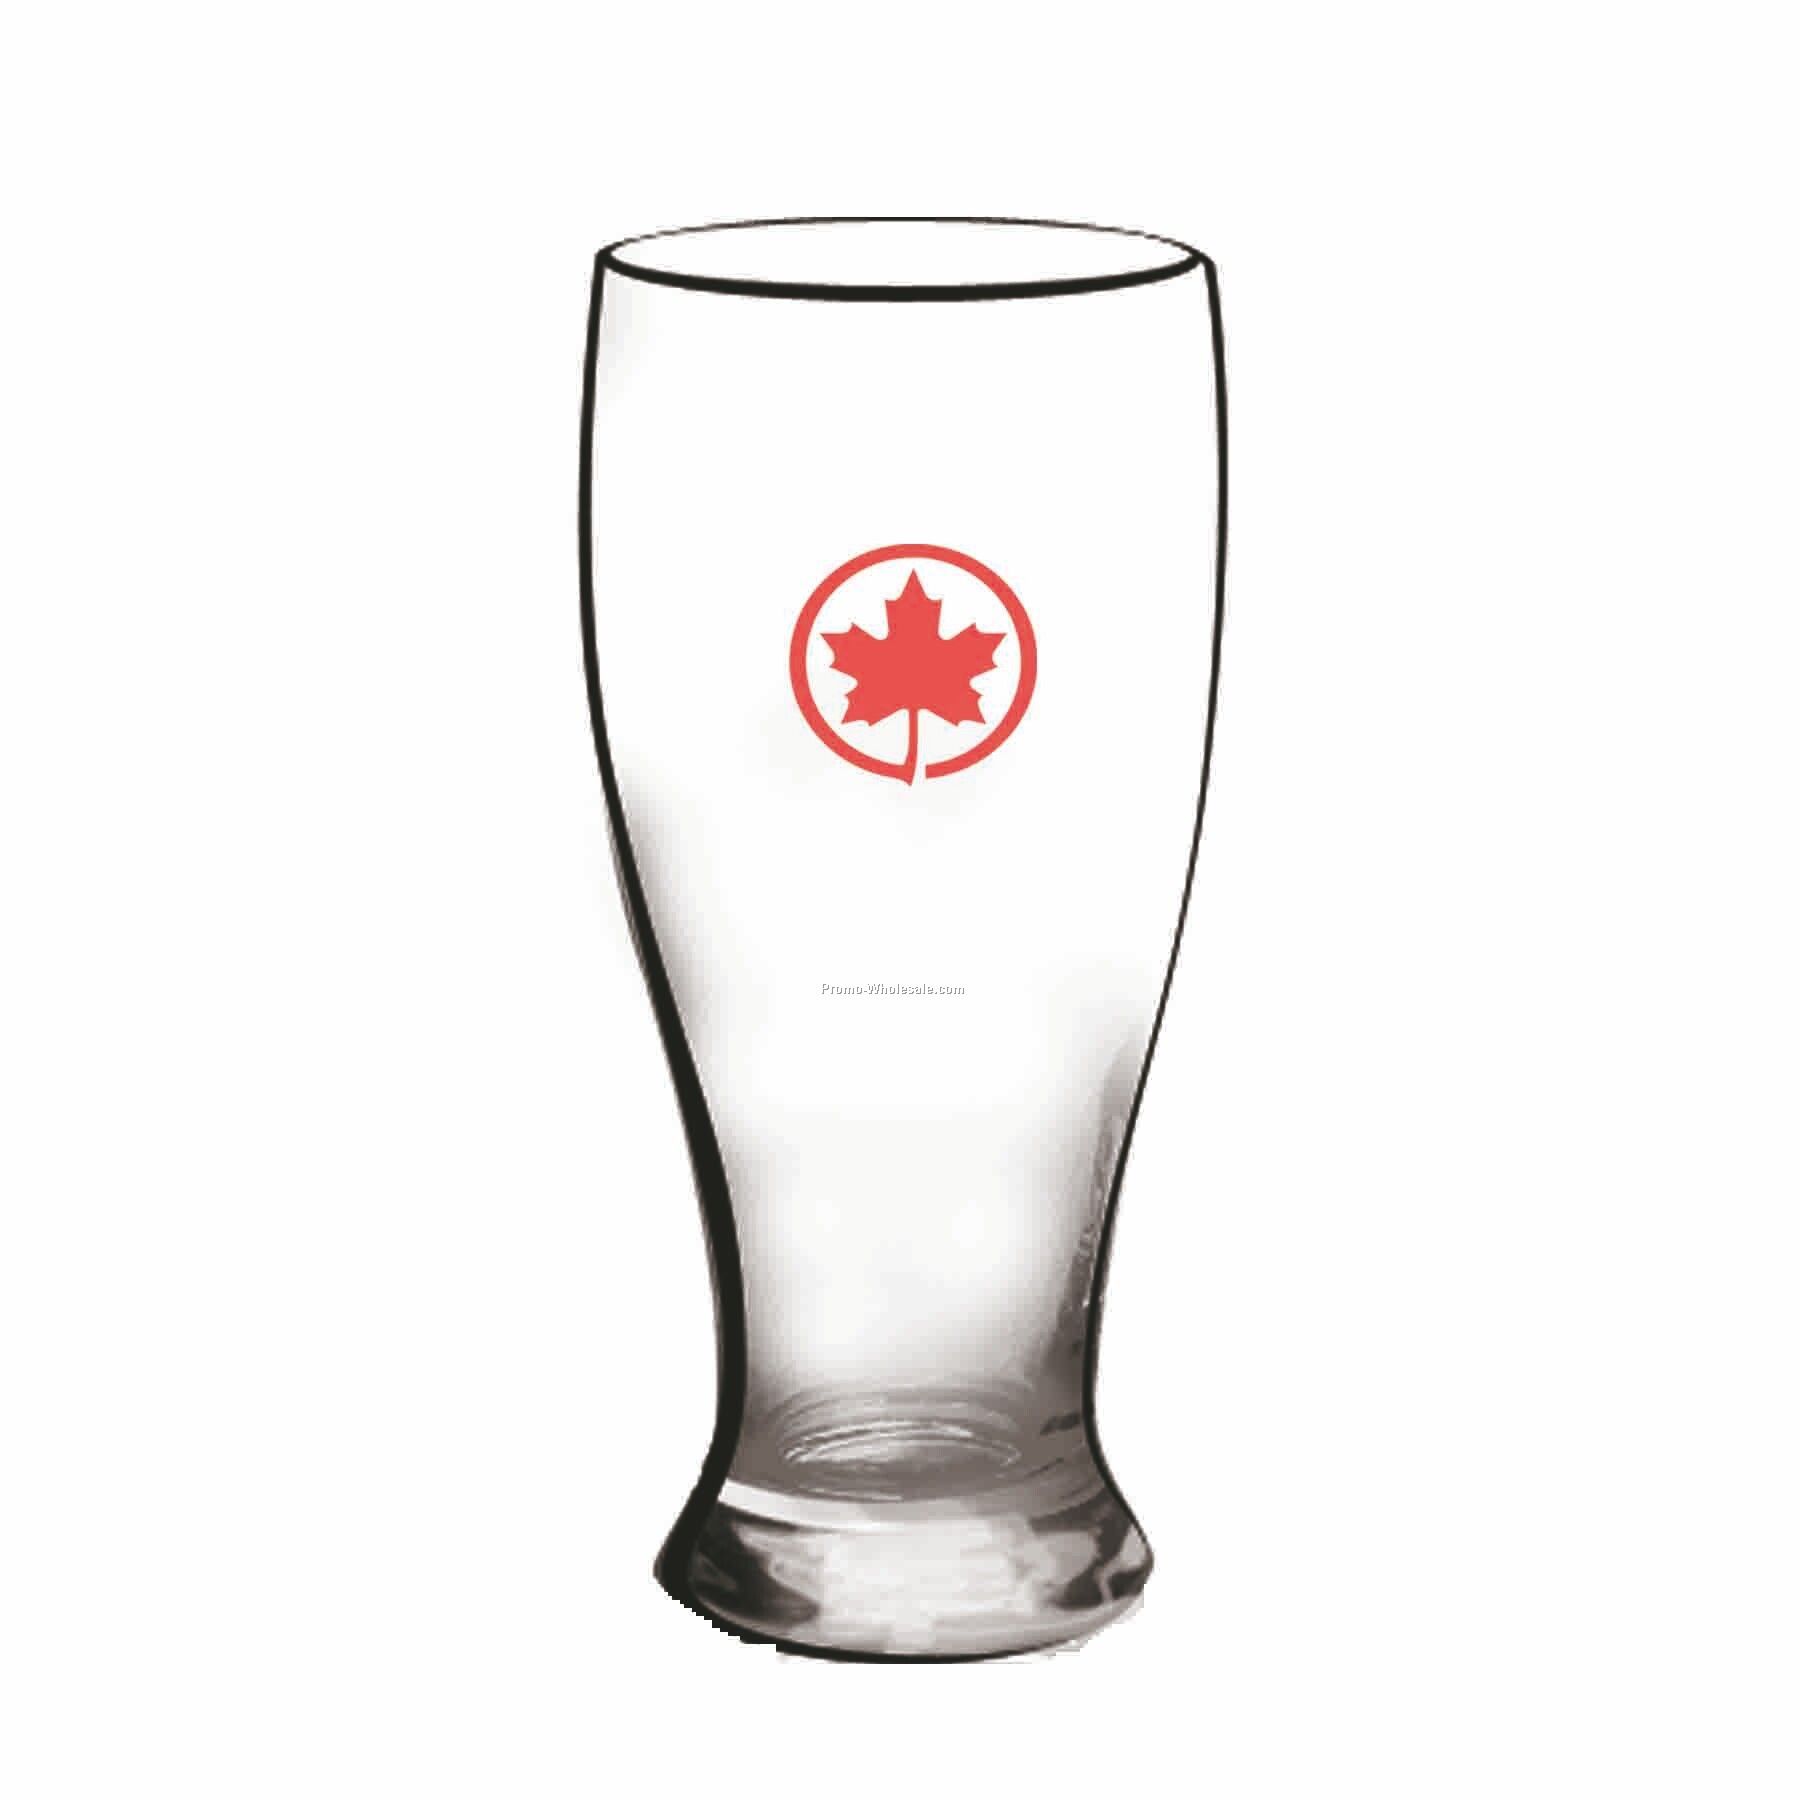 19 Oz. Crystal Pilsner Beer Glass W/ Curved Sides (Printed)